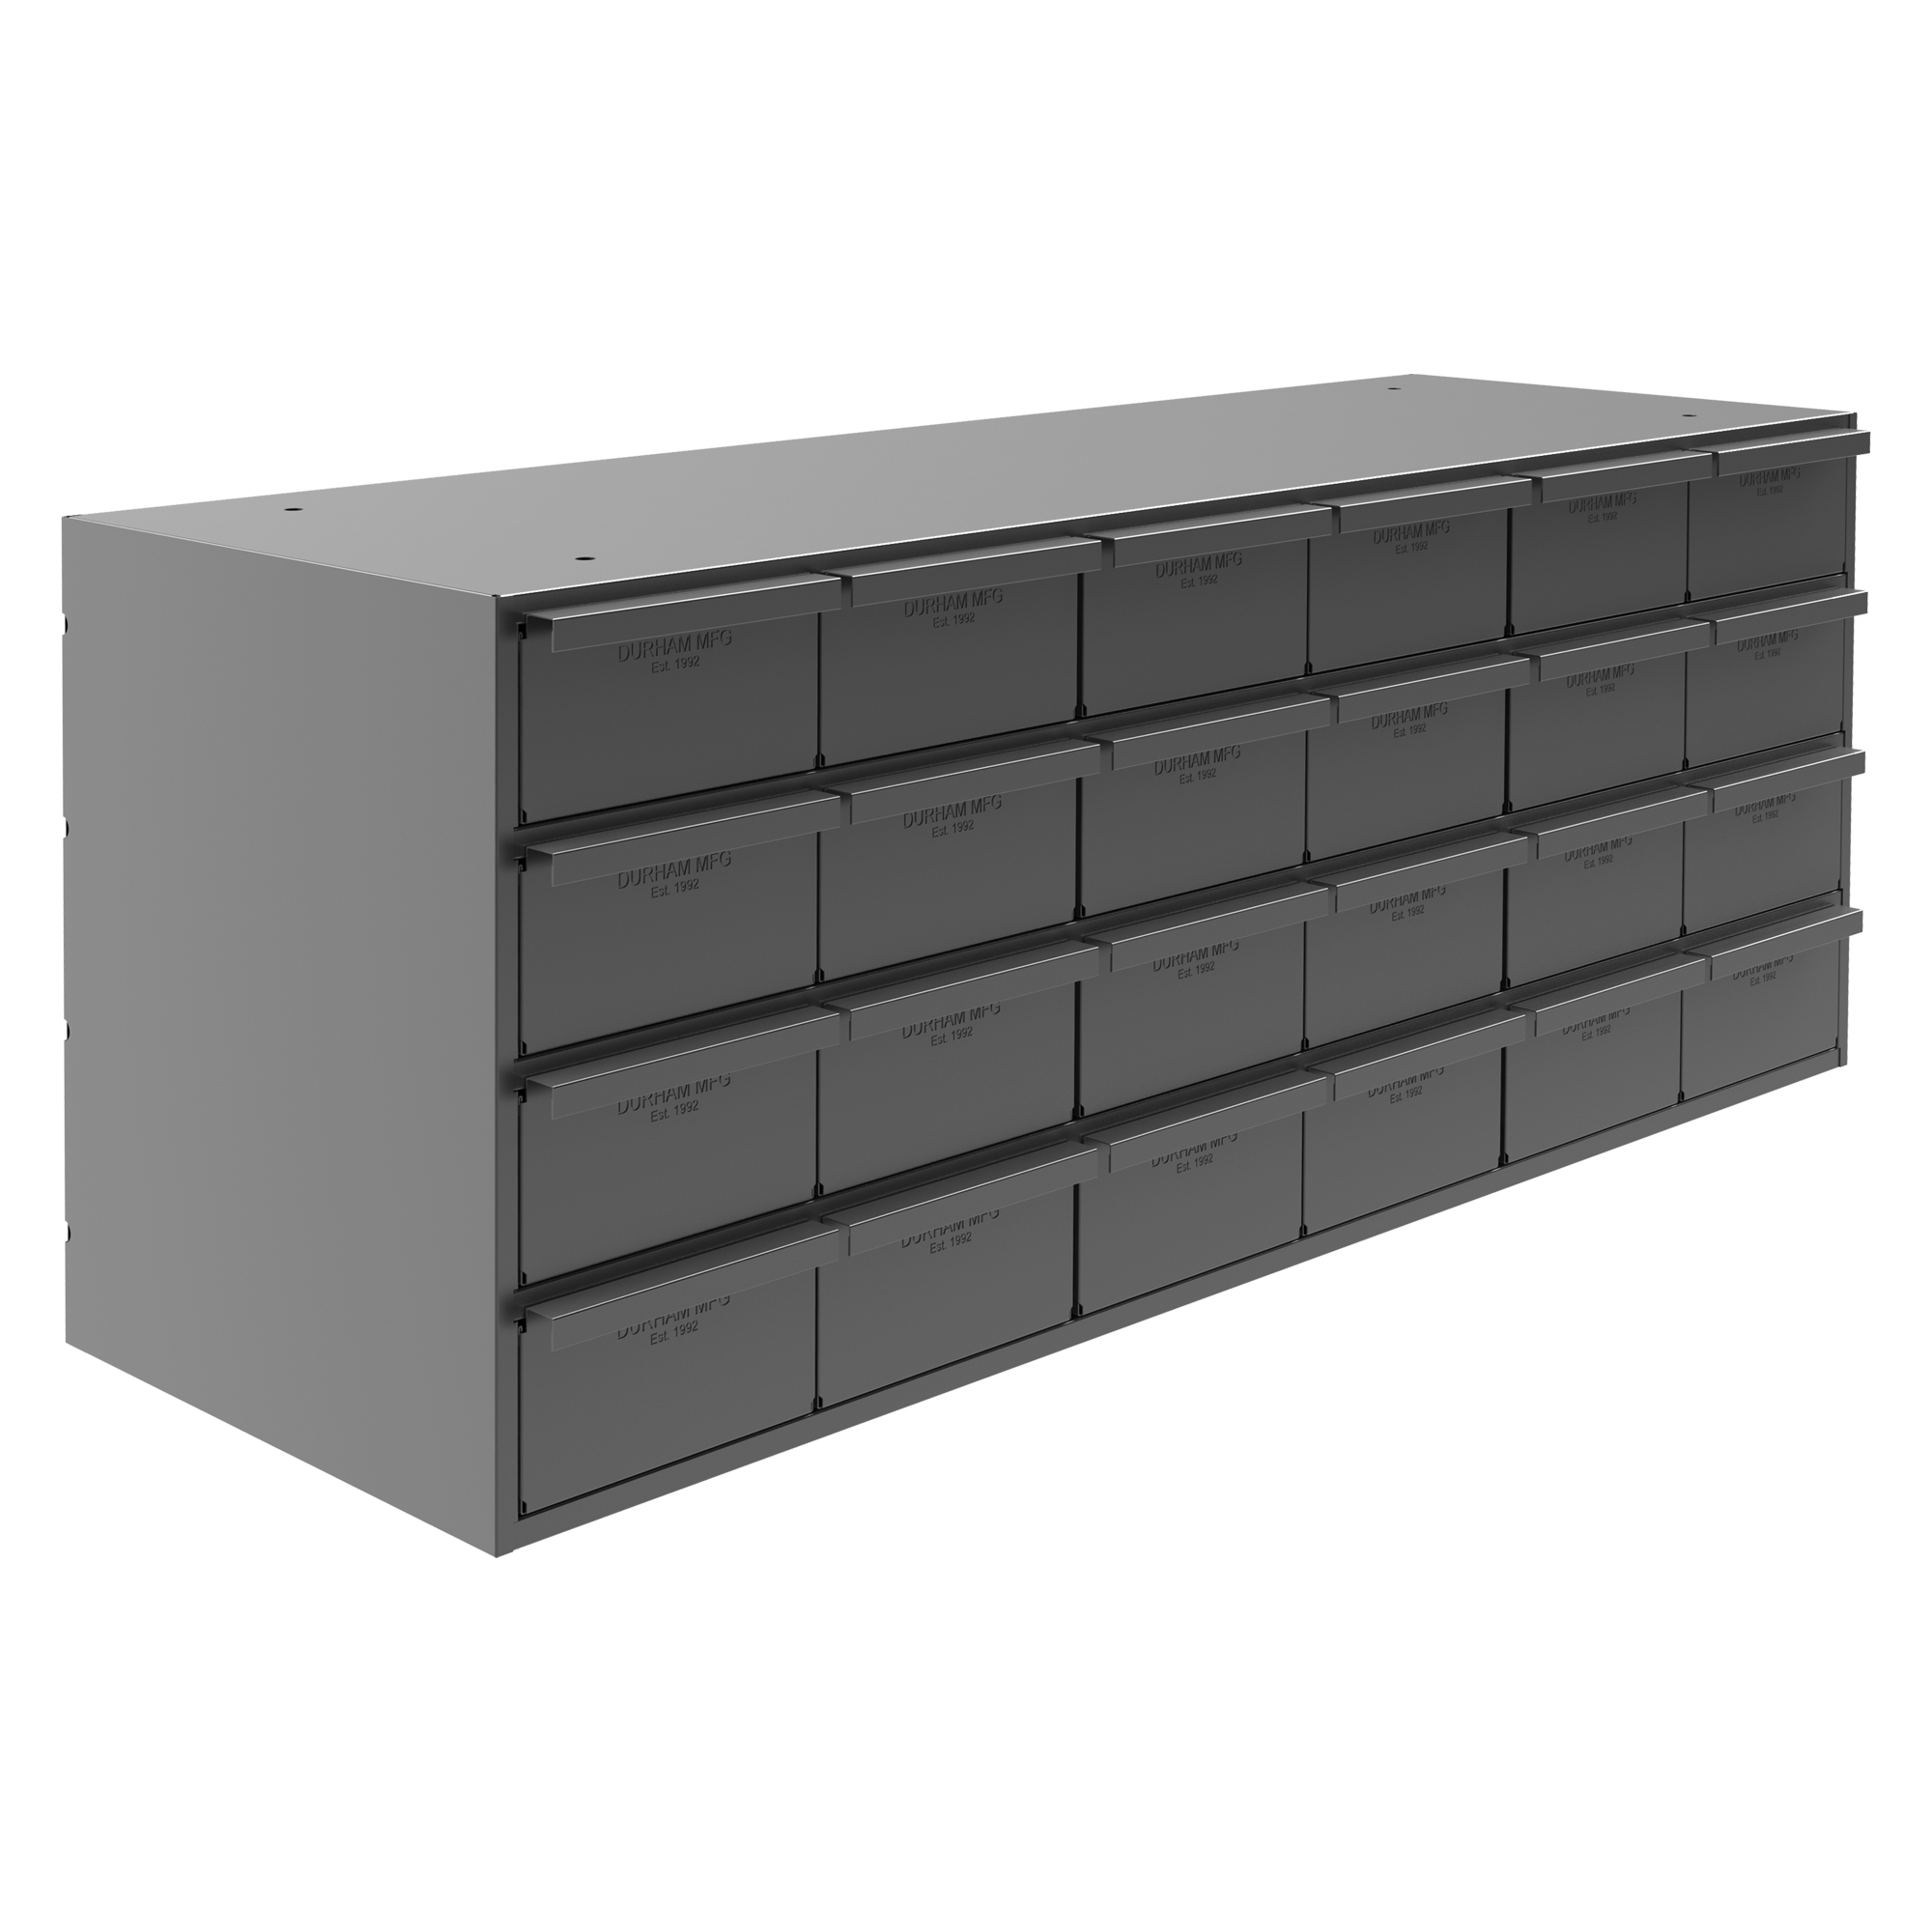 Durham Manufacturing 00795 Steel Bins 24 Drawer Cabinet for sale online 